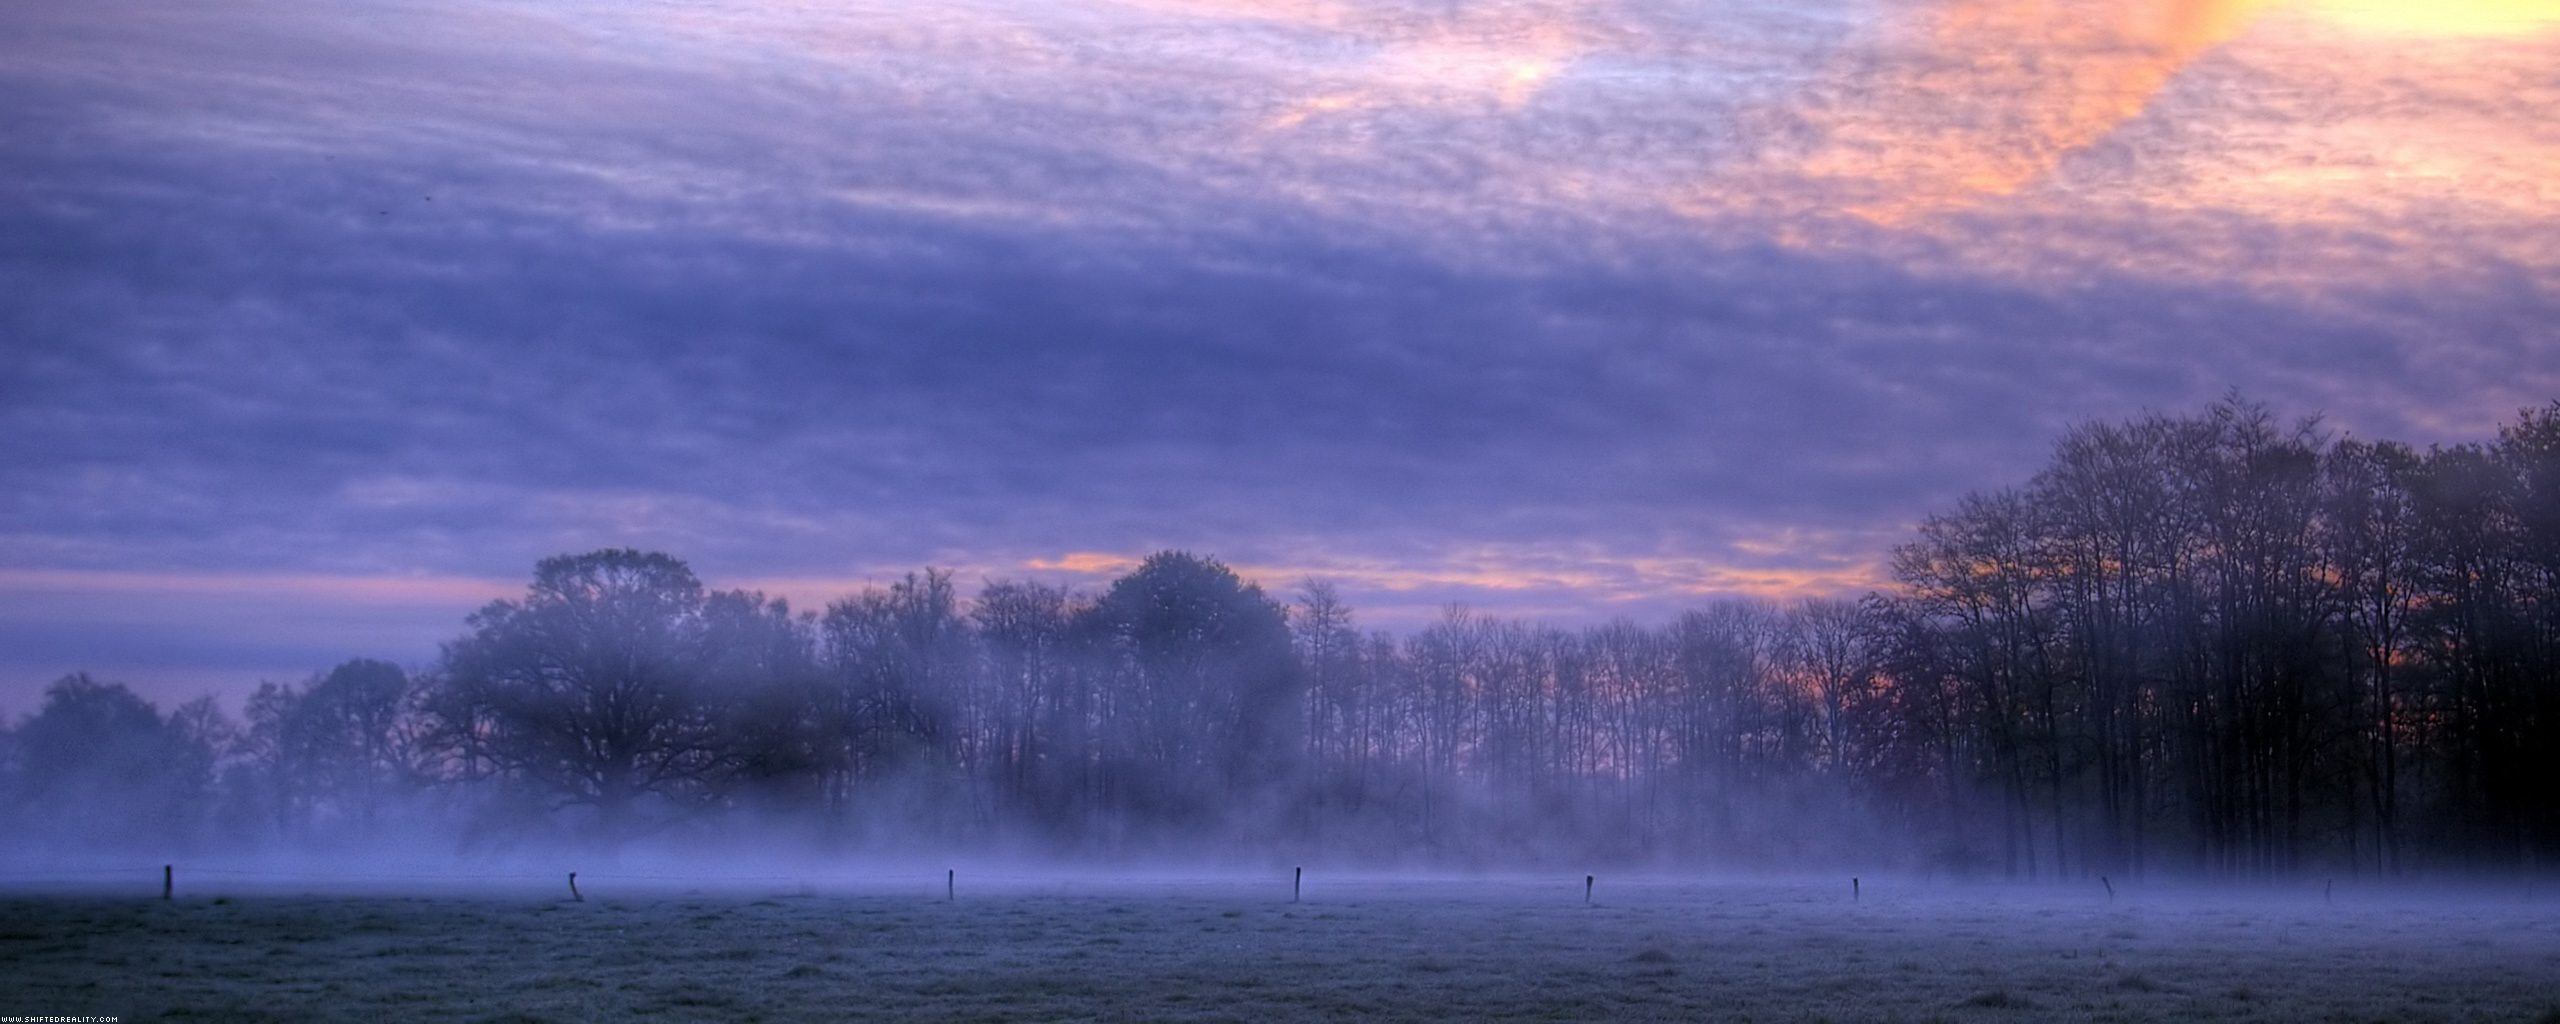 Morning Mist at Sunrise, Godalming, Surrey, England загрузить